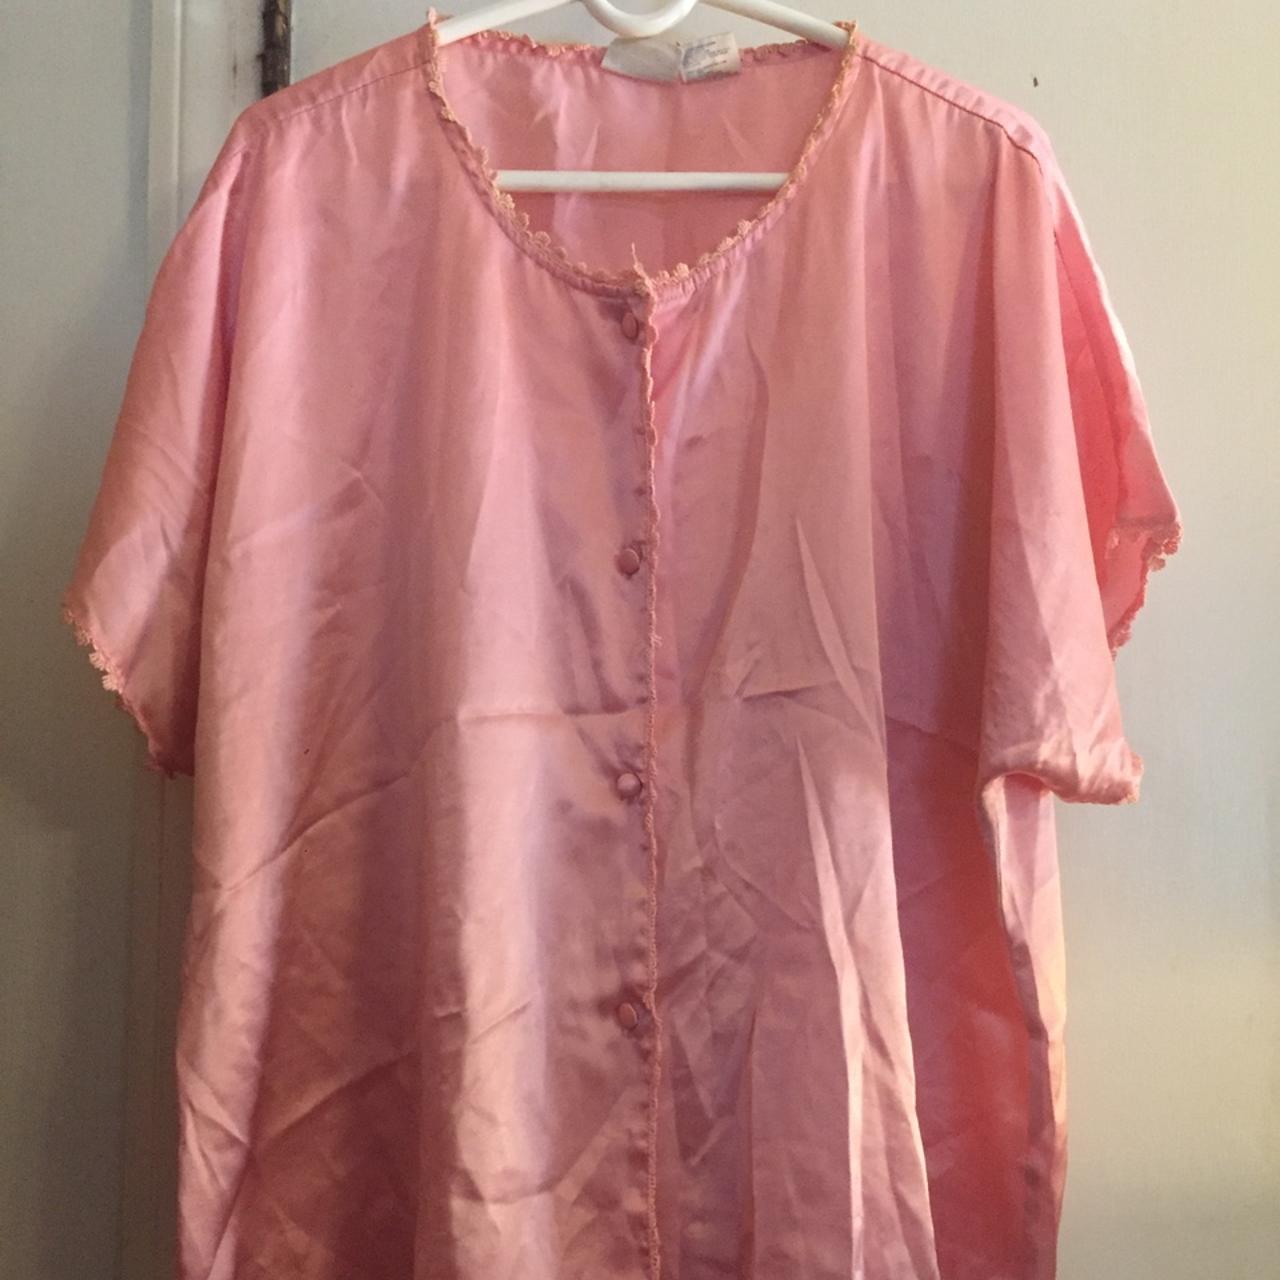 Product Image 1 - Intimate moods pink pajama set
lovely